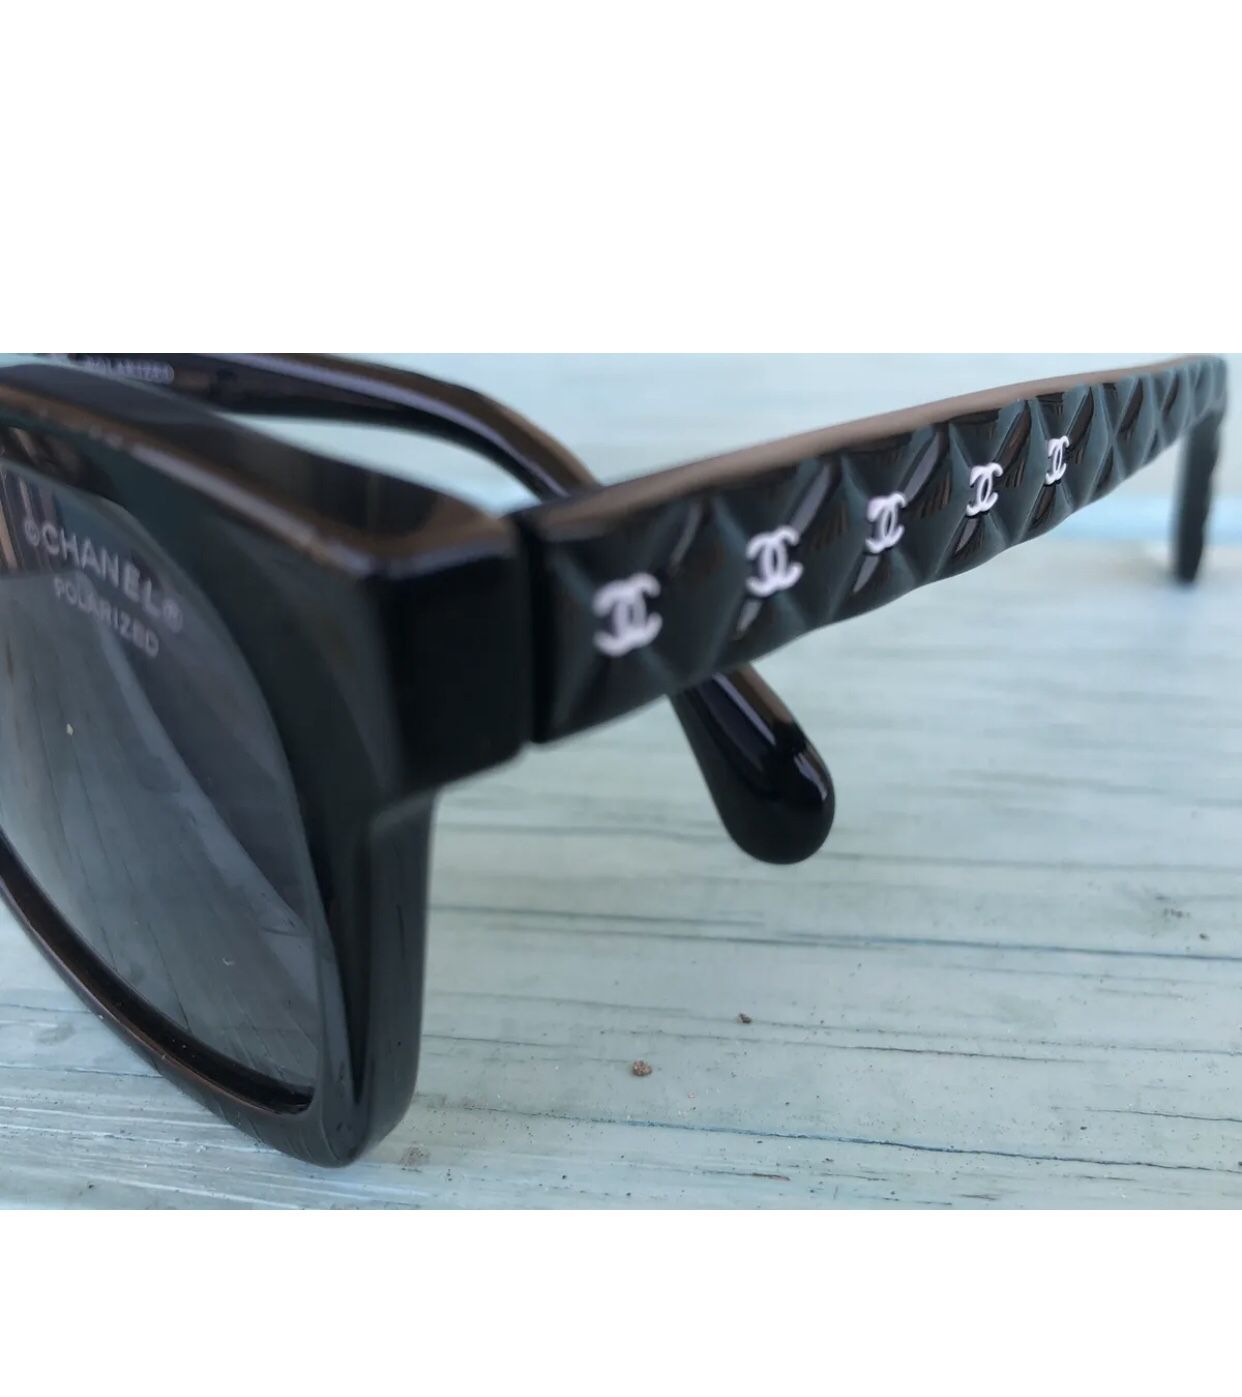 New Authentic 5484 Chanel Polarized Sunglasses 760/S8- 54-17-140